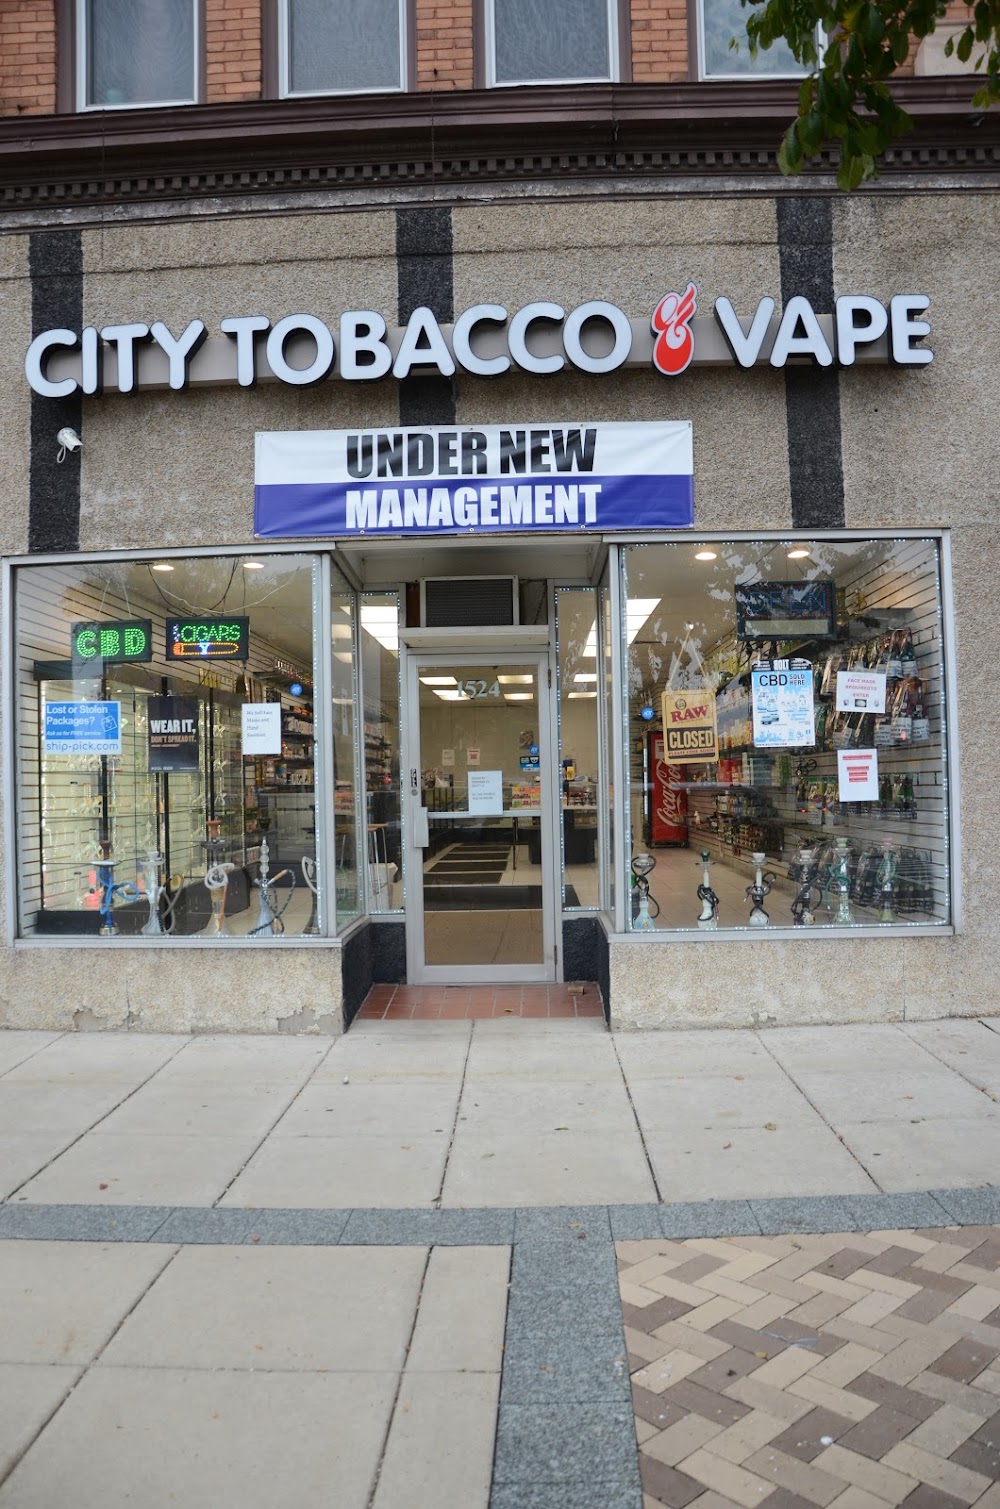 City Tobacco and Vape